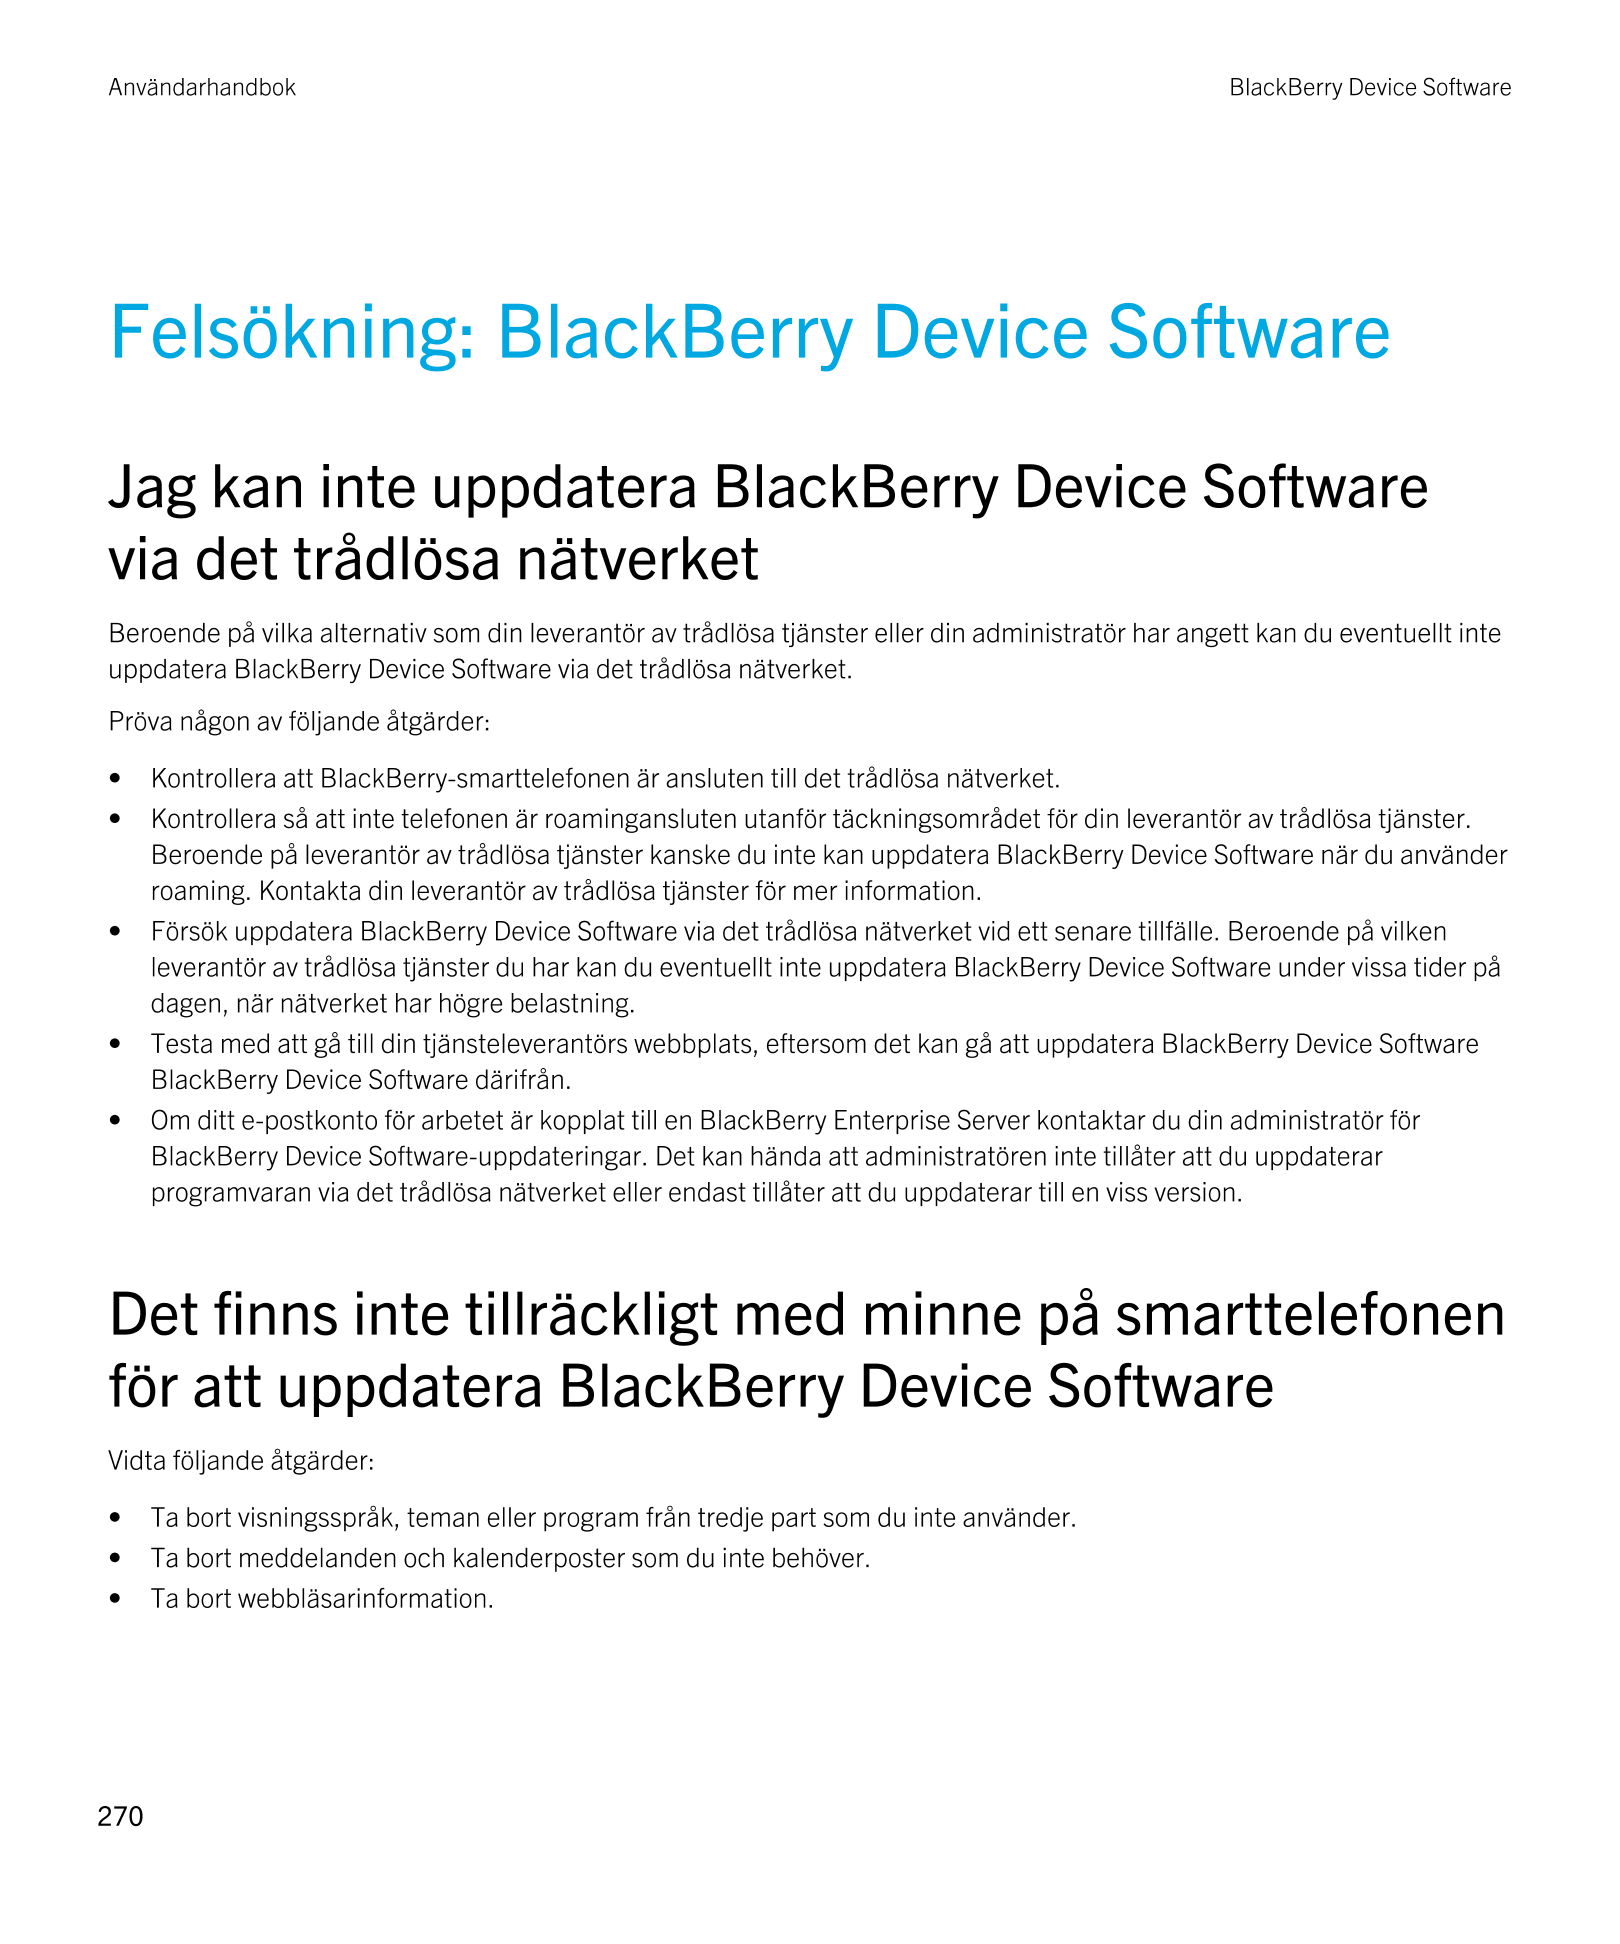 Användarhandbok BlackBerry Device Software
Felsökning:  BlackBerry Device Software
Jag kan inte uppdatera  BlackBerry Device Sof